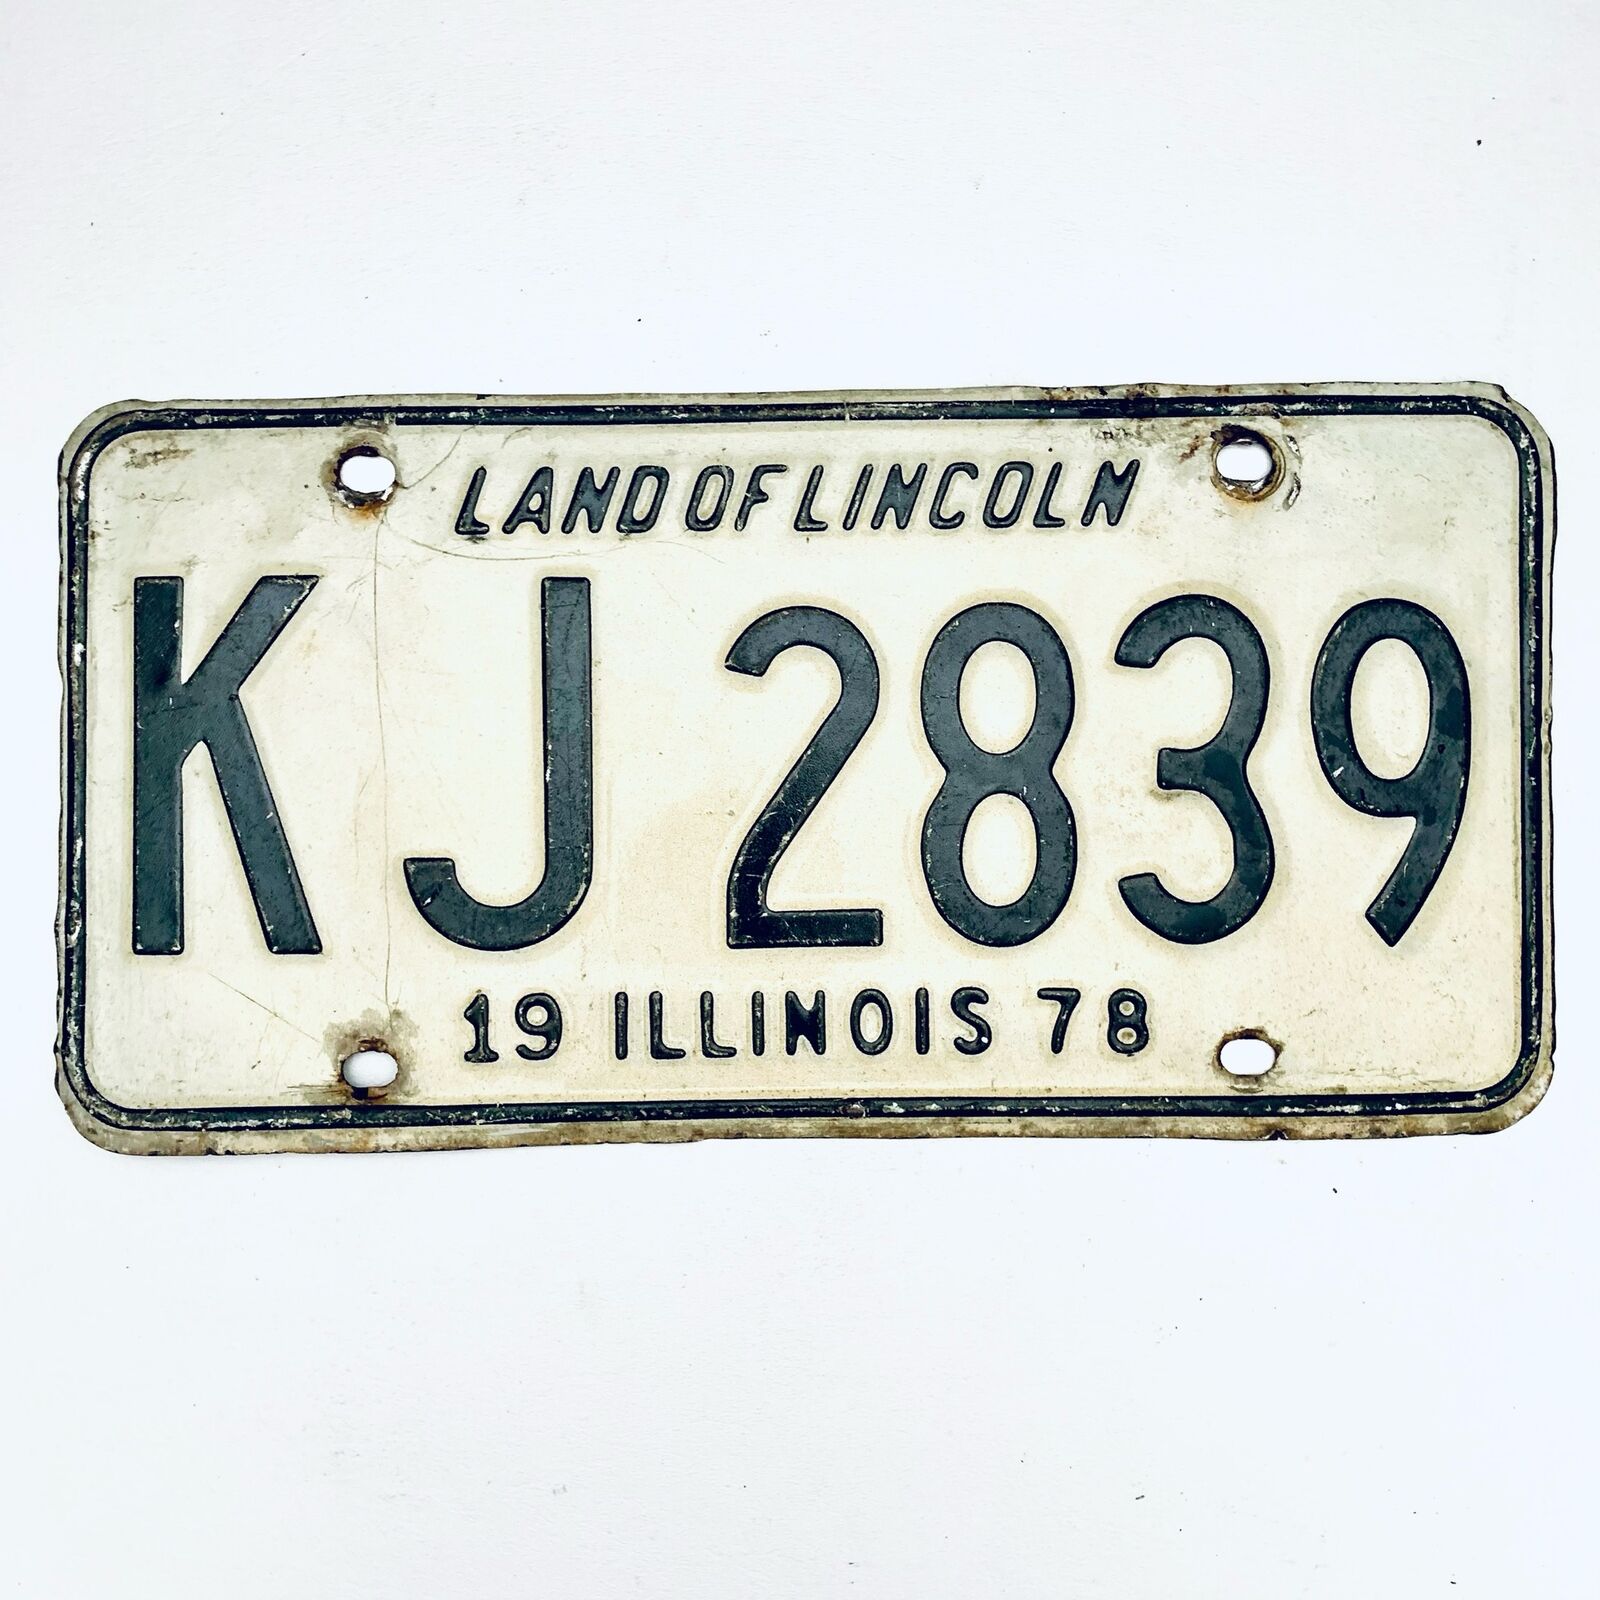 1978 United States Illinois Land of Lincoln Passenger License Plate KJ 2839